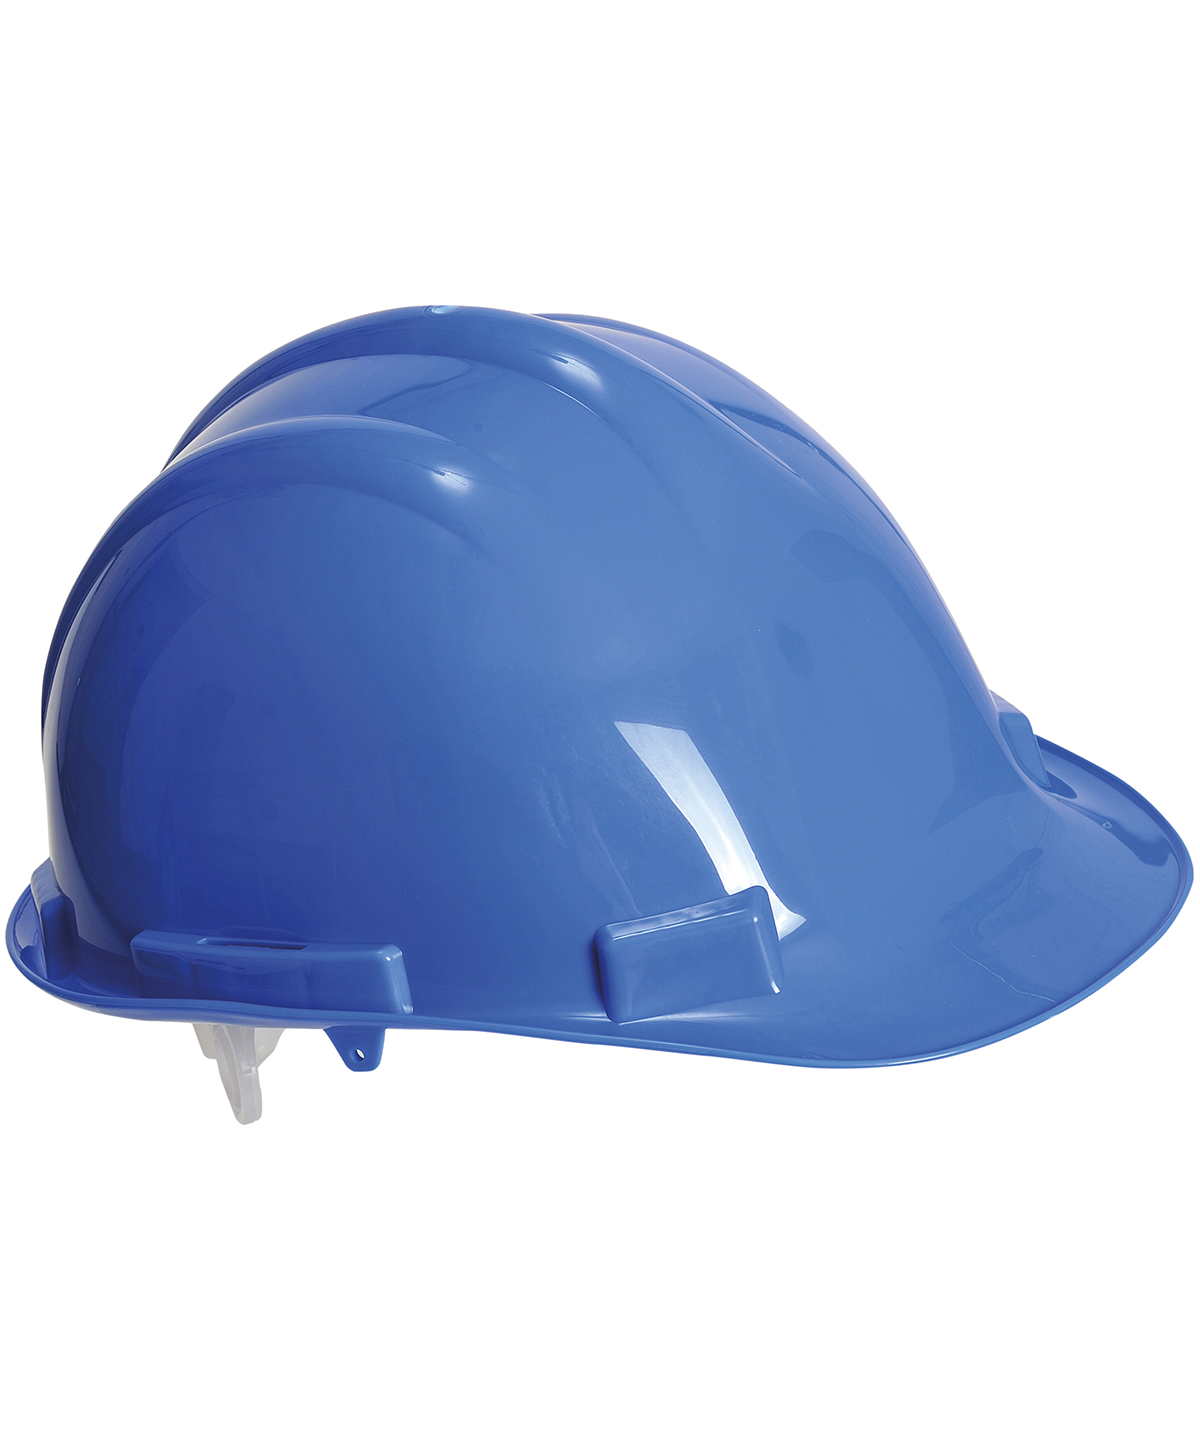 Expertbase Safety Helmet (Pw50) Blue Size One Size